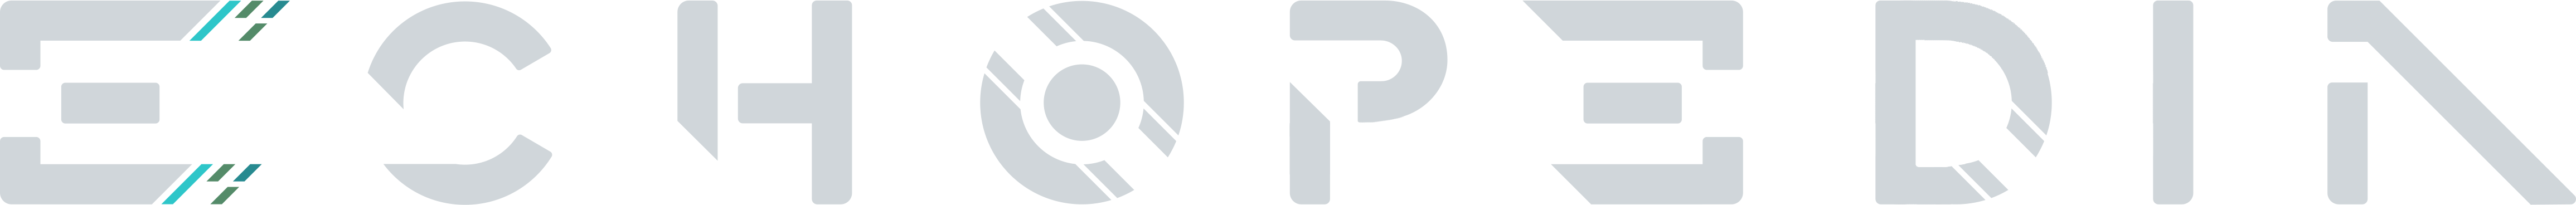 Echopedia Logo.png